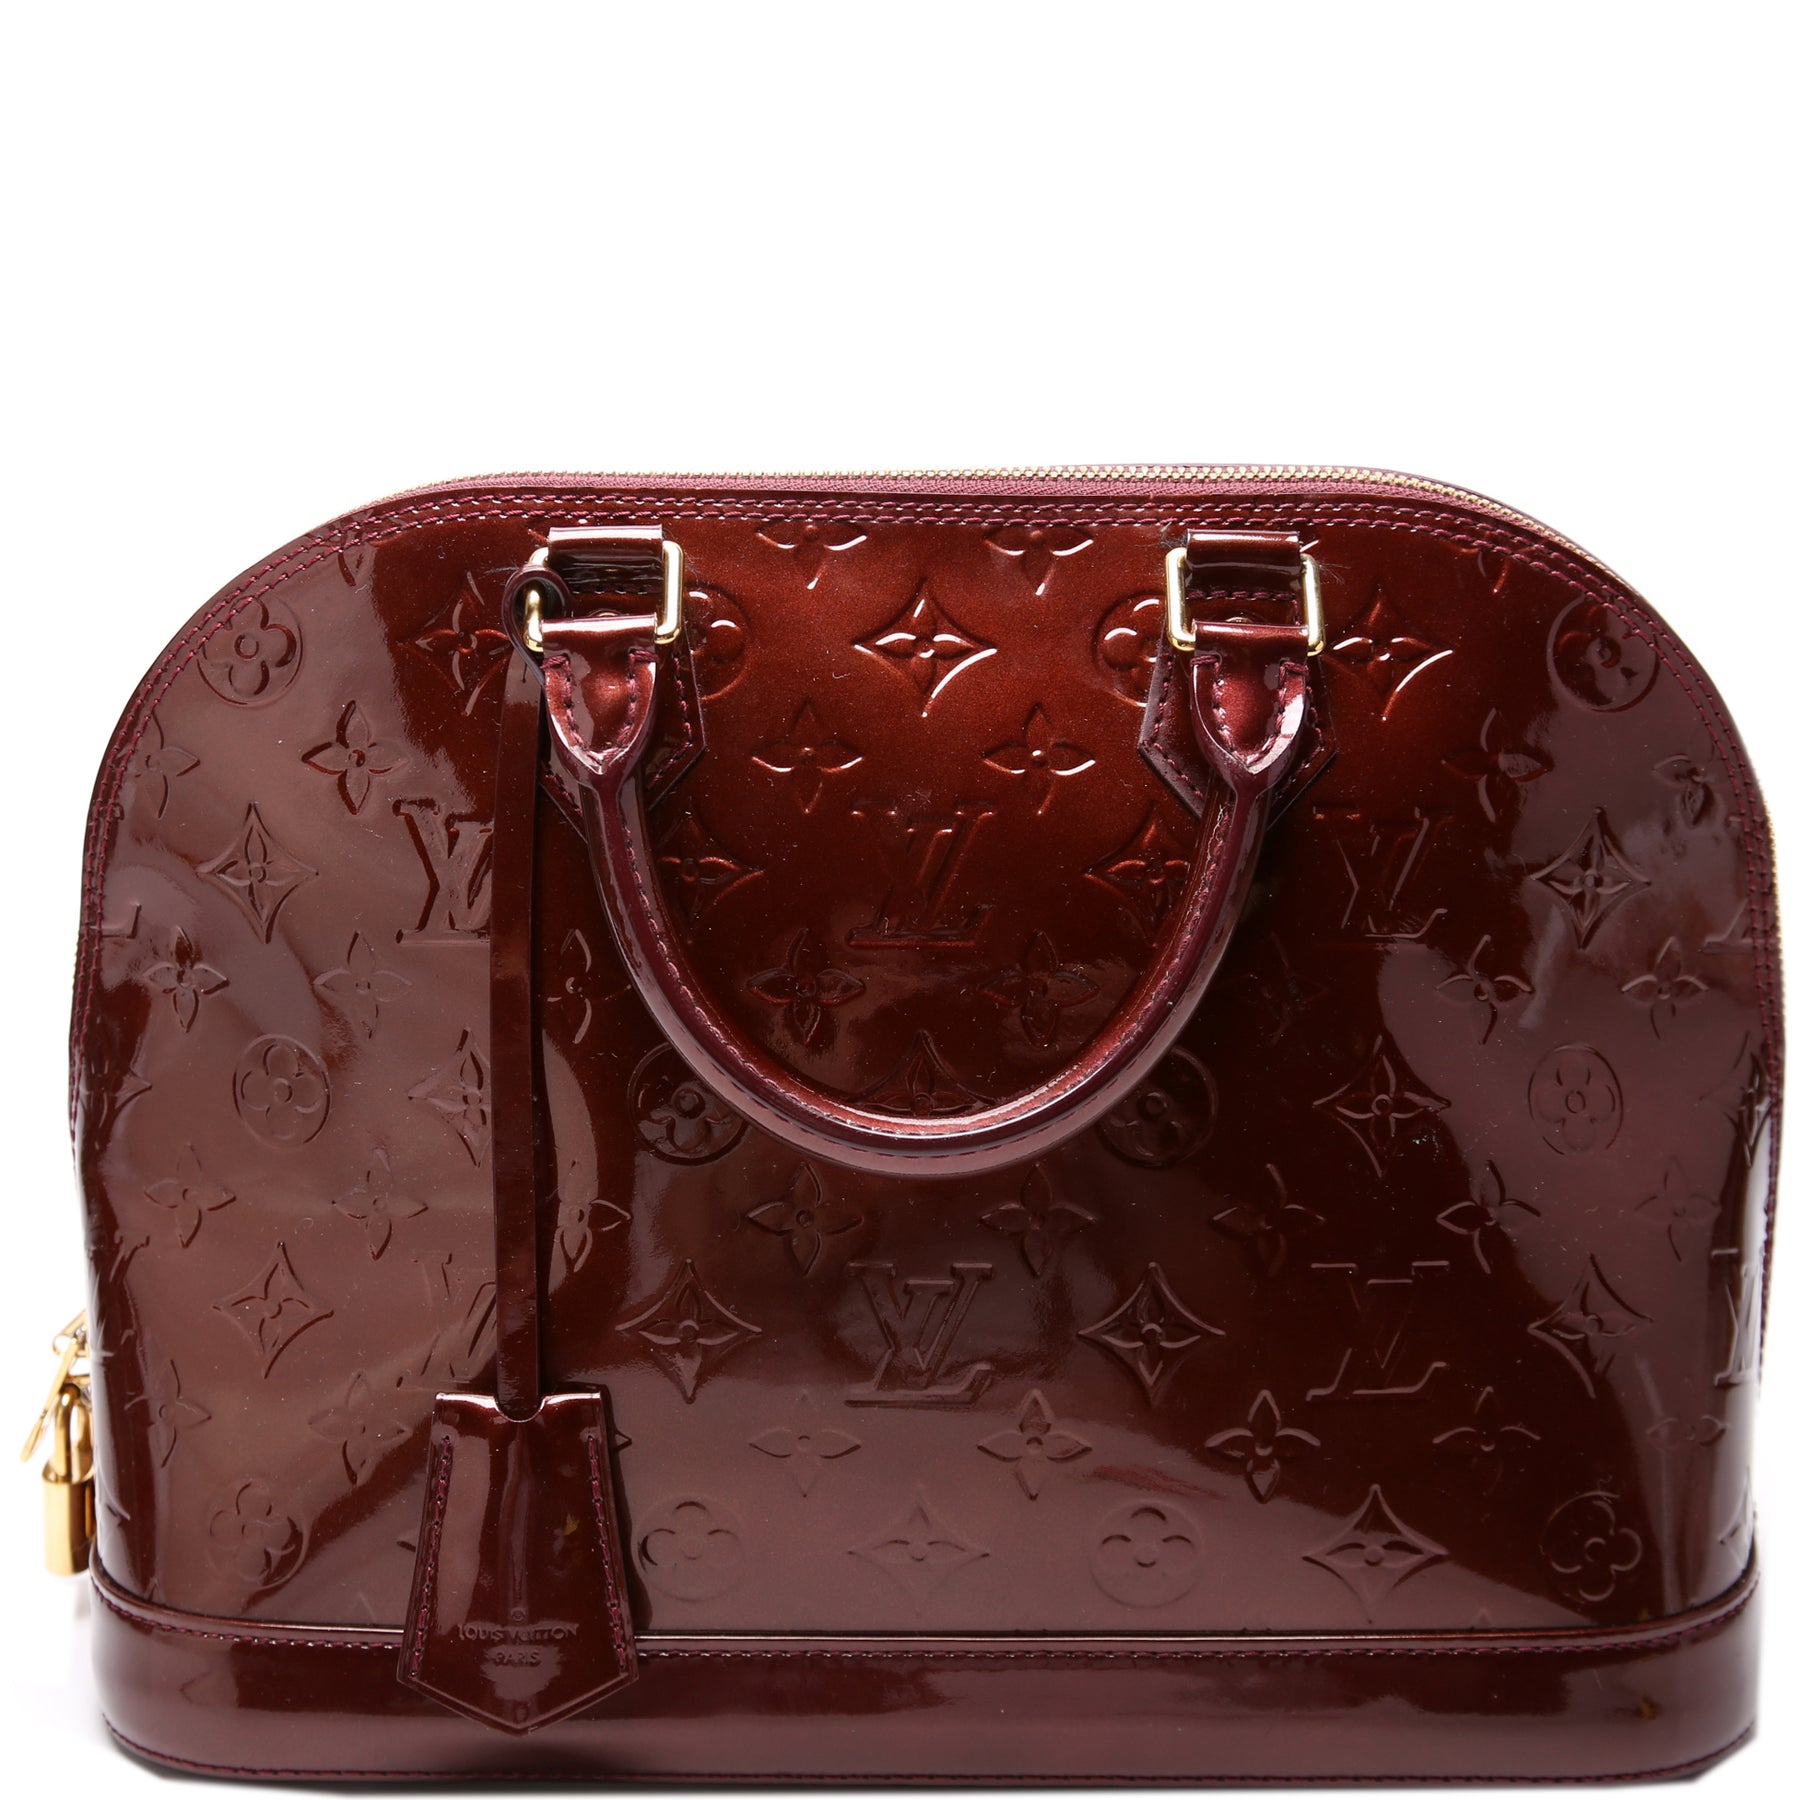 100% Authentic LOUIS VUITTON Vernis Alma PM Burgundy Handbag Patent Leather